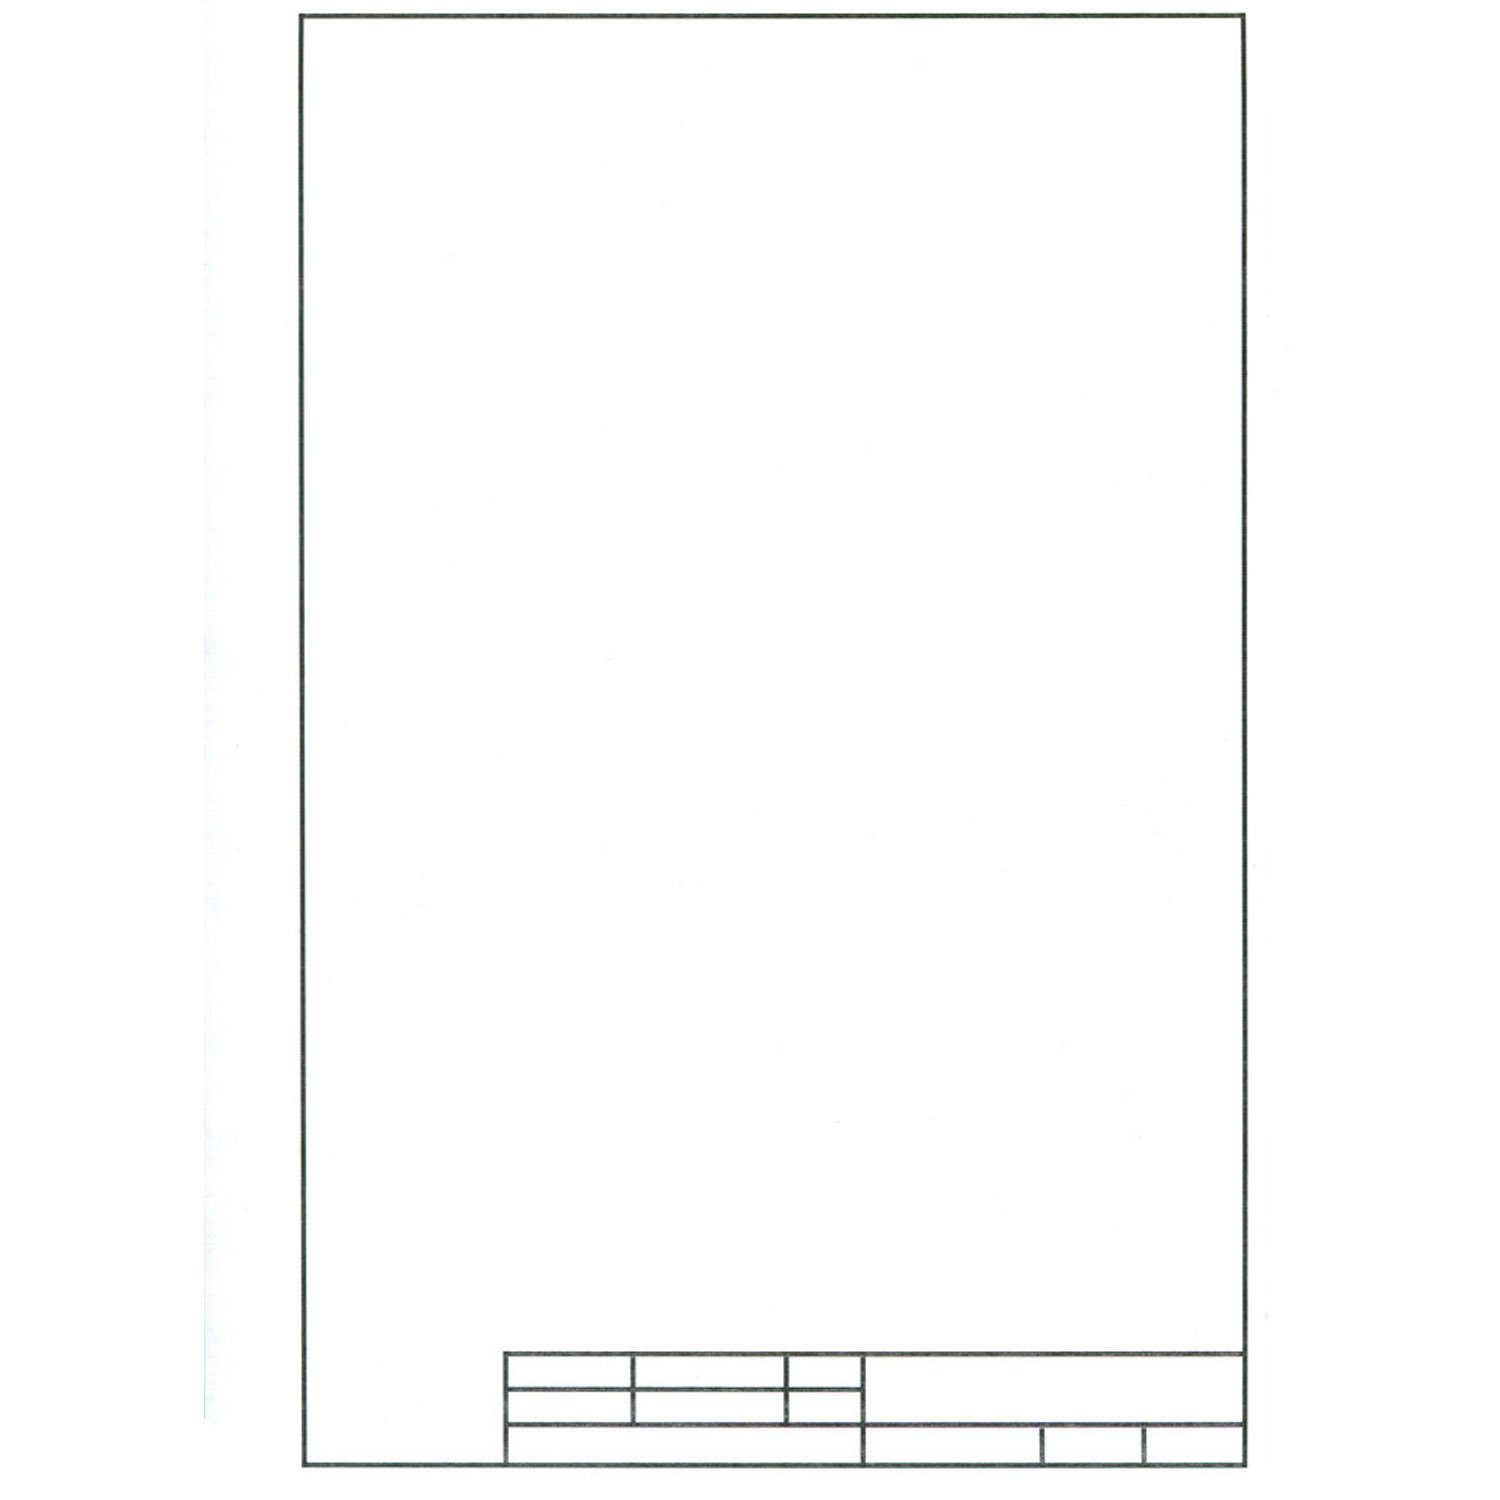 1 16 формата а4. Чертёжная бумага а4 с рамкой и штампом 55х185. Для черчения а4 вертикальная Hatber. А4 чертежная рамка СПГТИ. Папка для черчения а4 вертикальная рамка 10 листов.